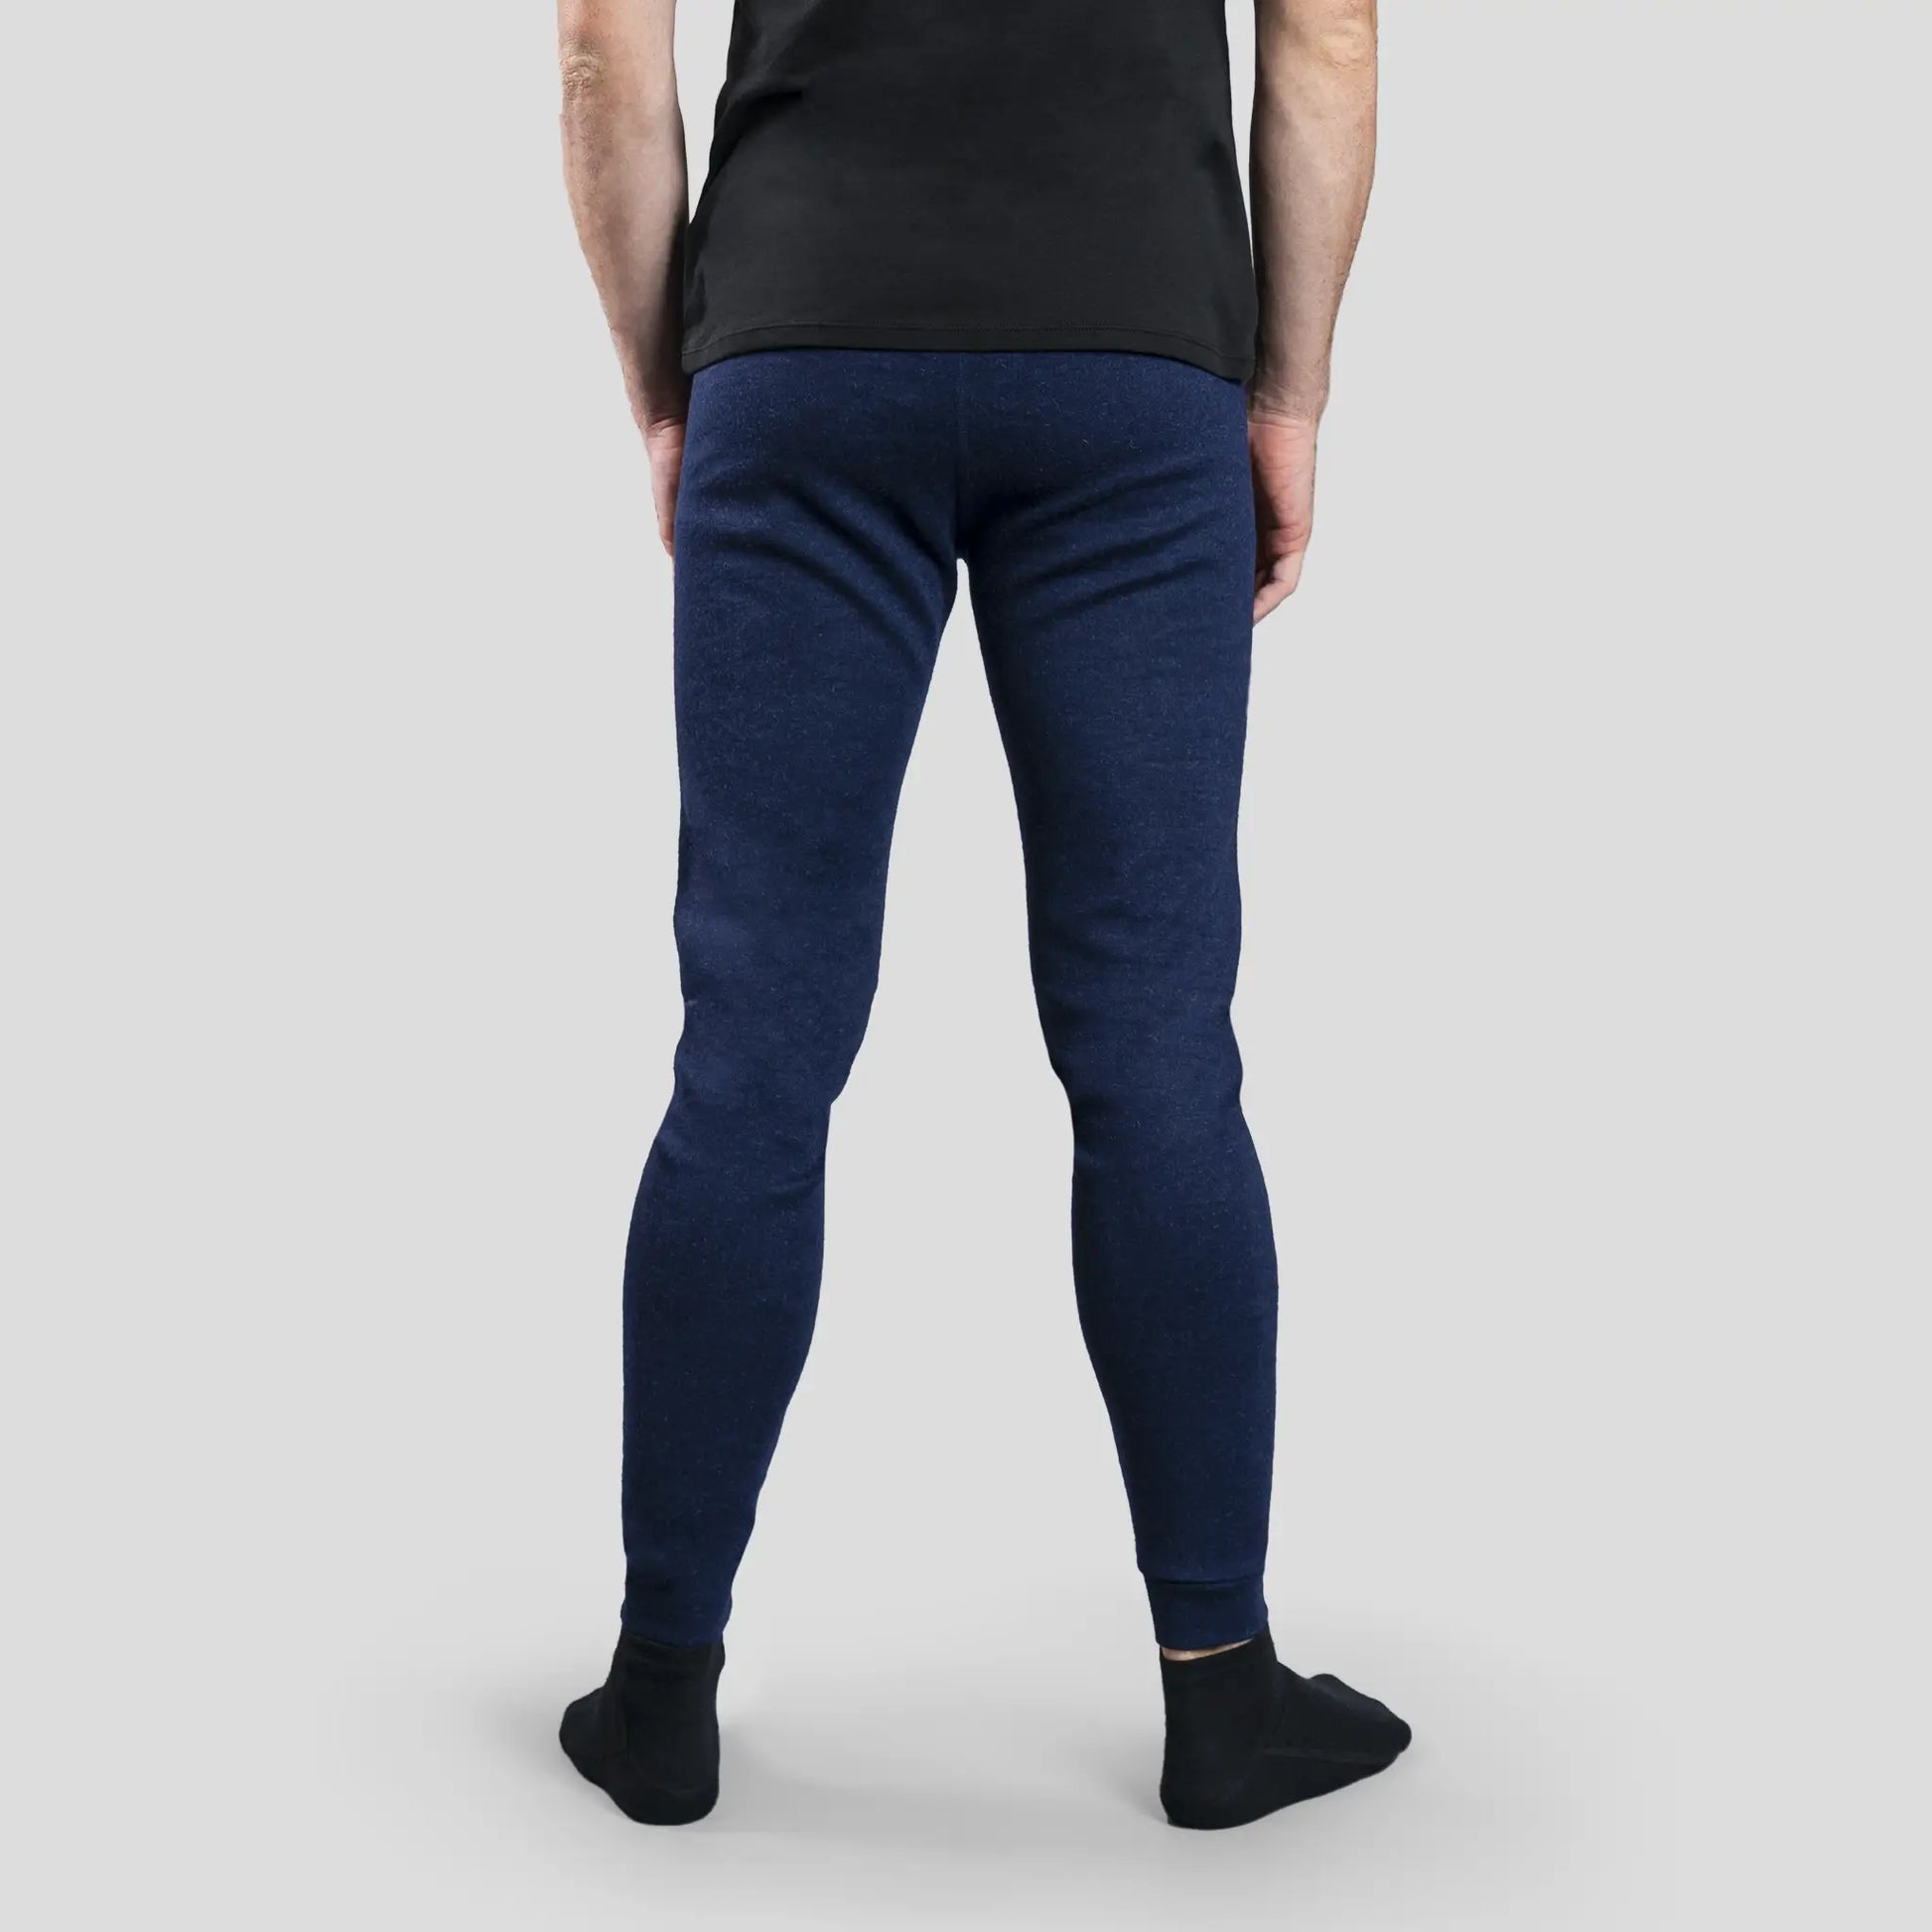 mens biodegradable wool sweatpants color navy blue